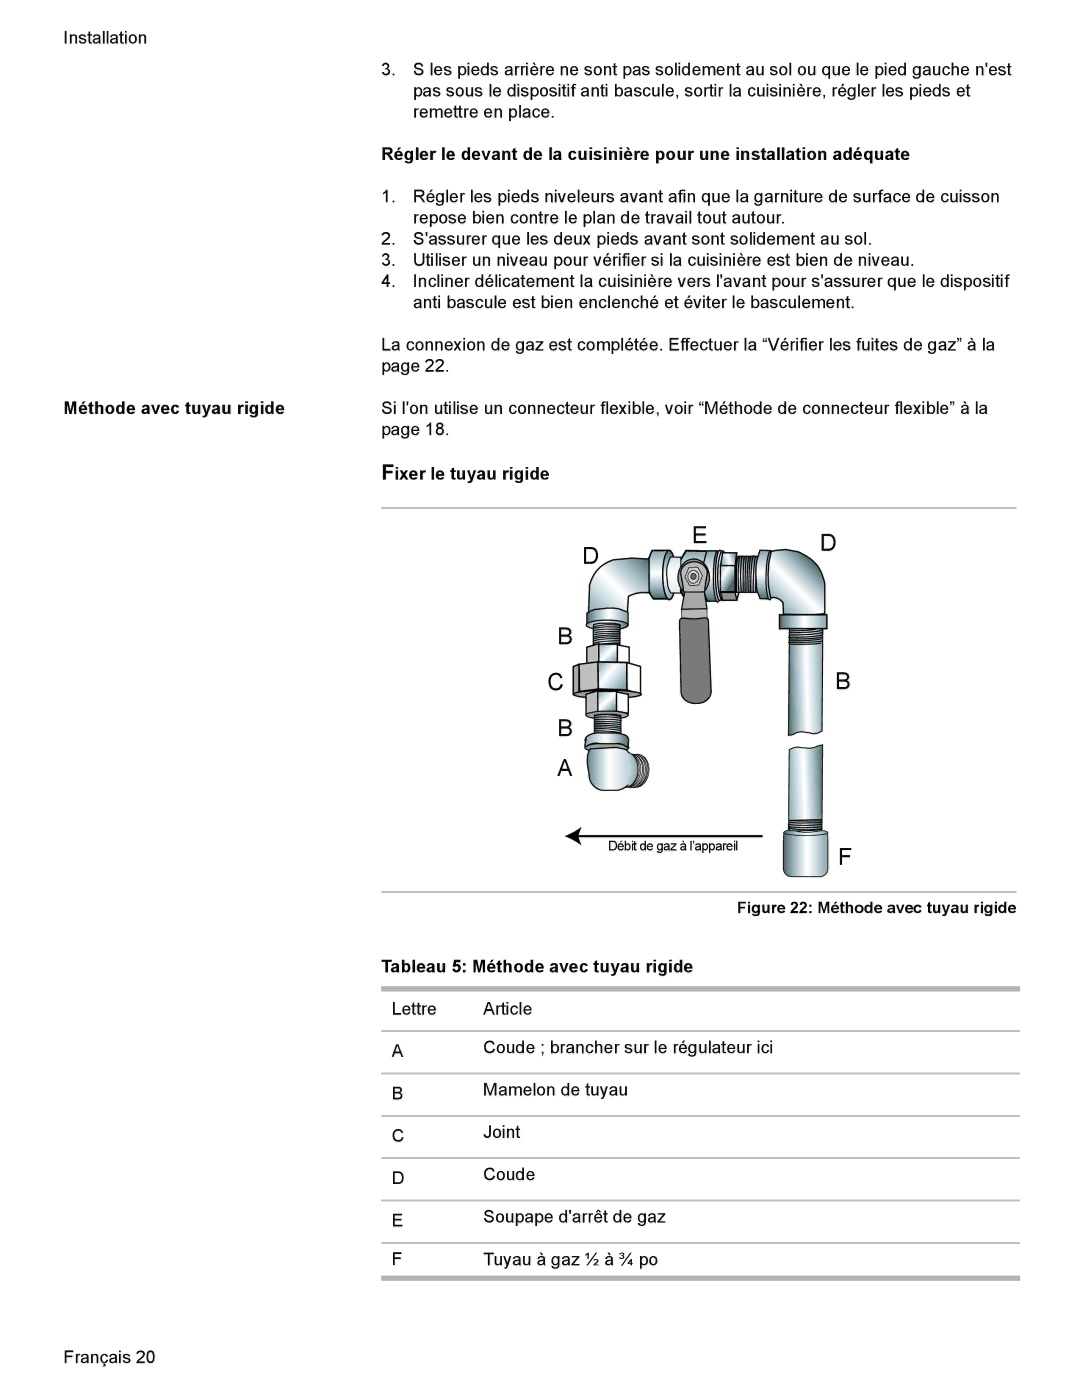 Bosch Appliances Dual-Fuel Slide-In Range installation instructions Méthode avec tuyau rigide, Fixer le tuyau rigide 